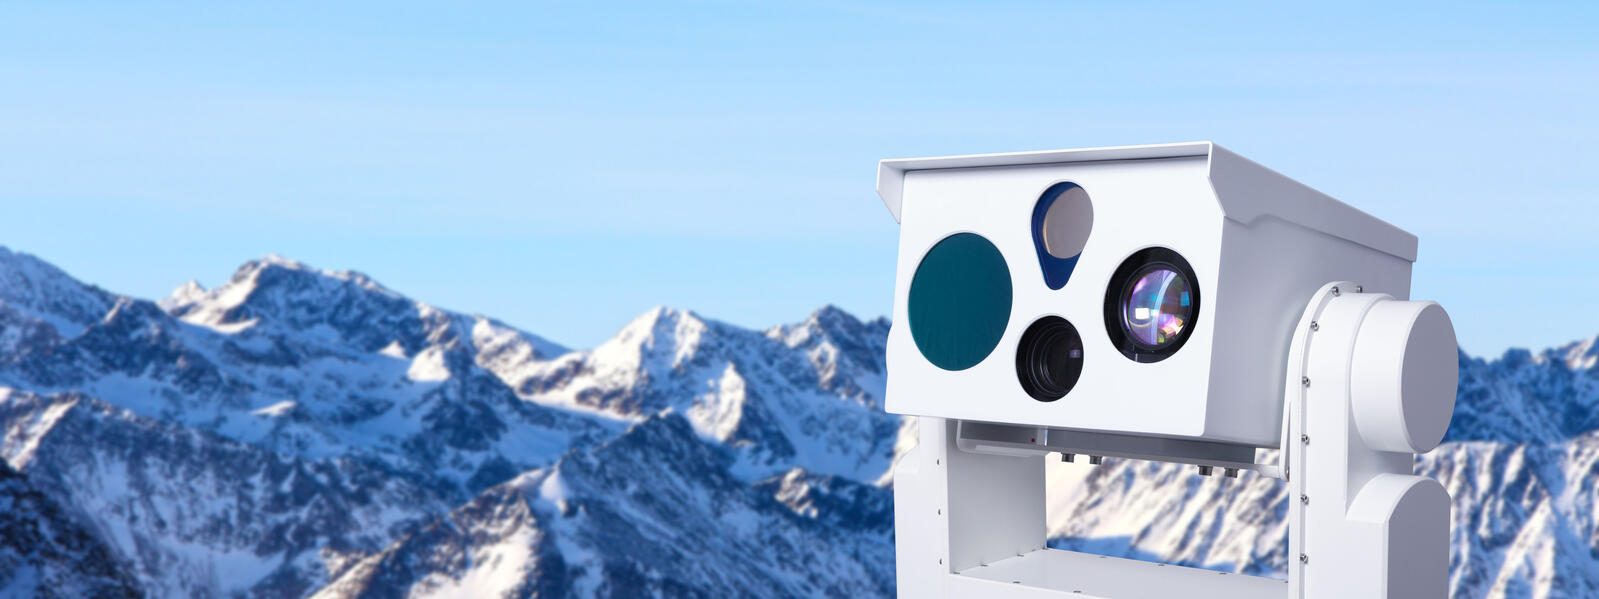 LEOS multi-sensor camera system with mountain background